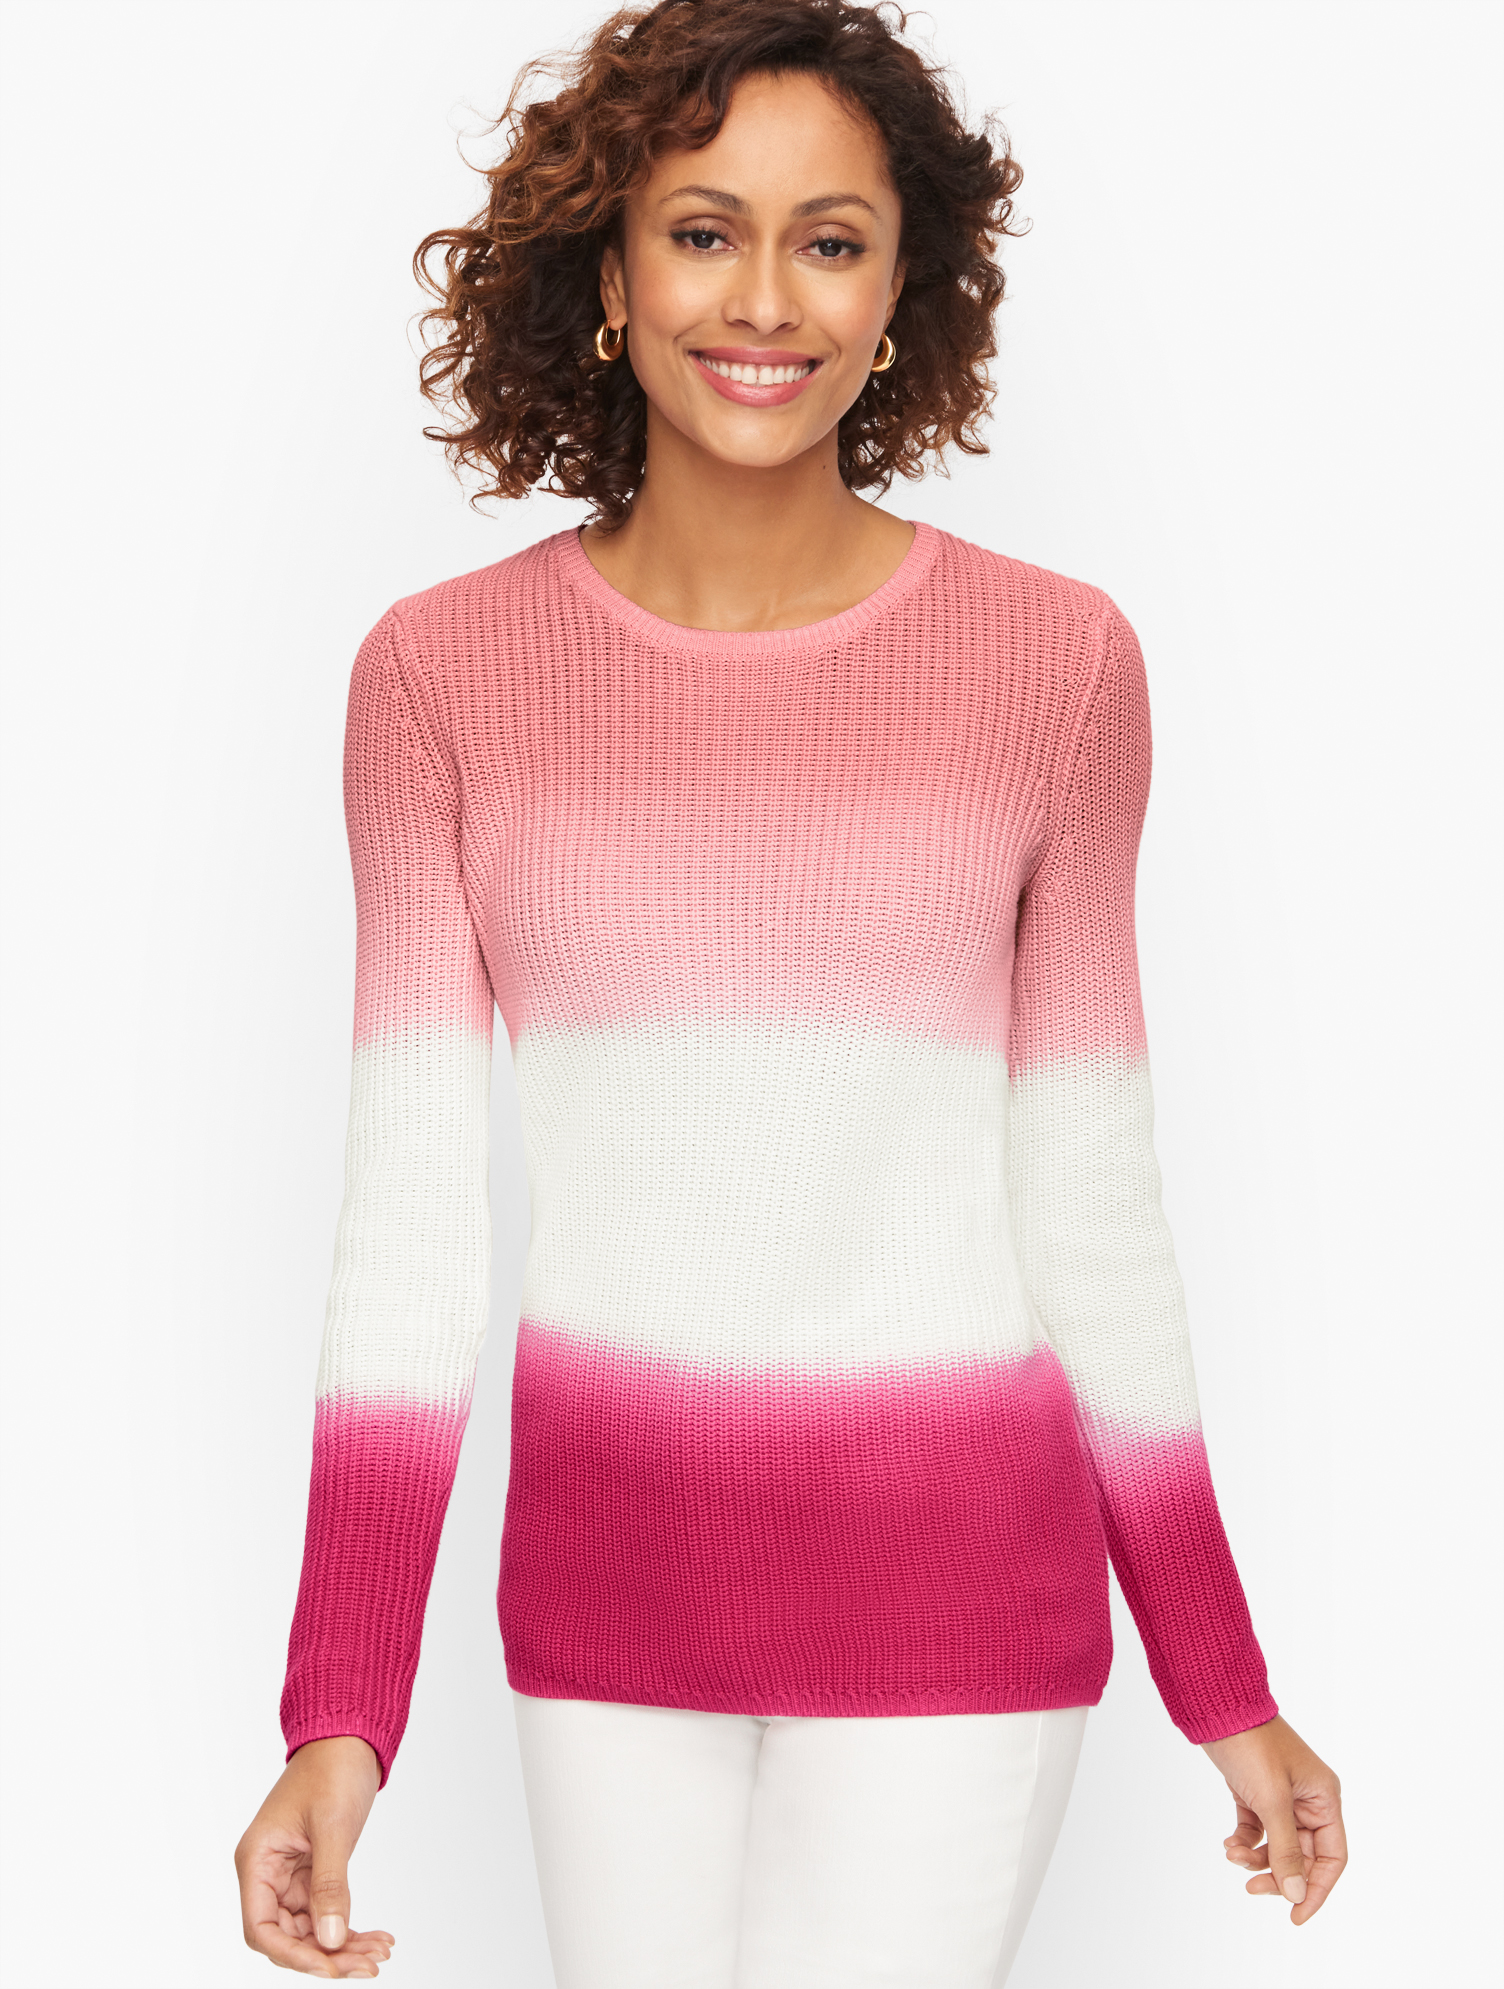 Talbots Petite - Shaker Stitch Sweater - Ombrã© Dip Dye - Punch Pink - Large - 100% Cotton